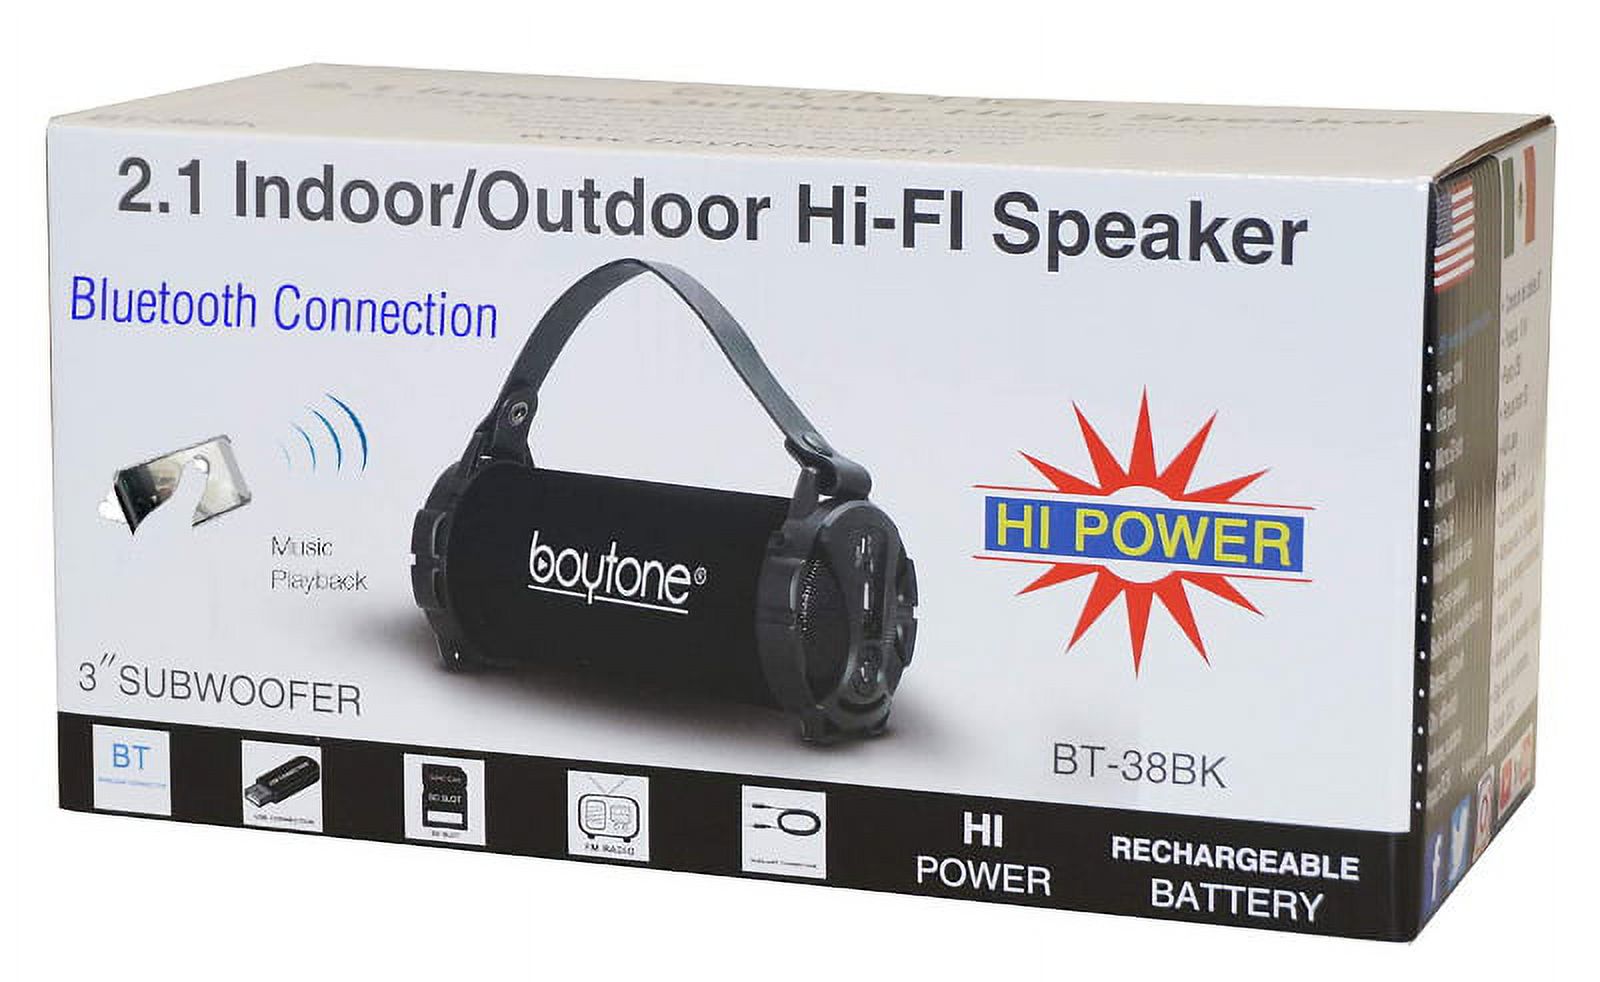 Boytone BT-38BK Portable Bluetooth Indoor/Outdoor Speaker - Black - image 3 of 3